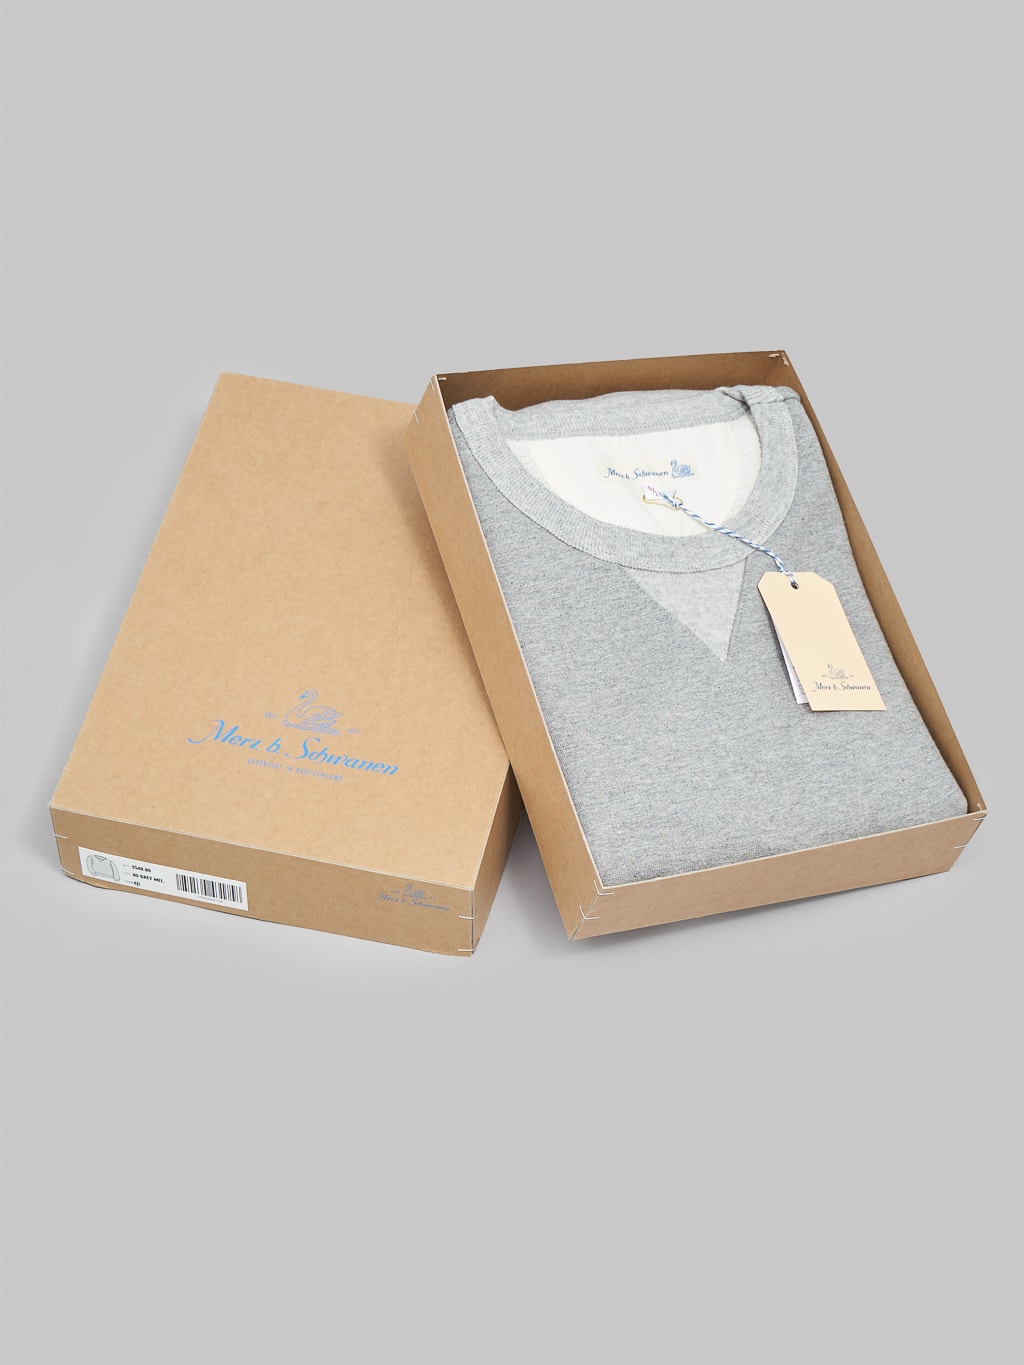 Merz b schwanen loopwheeled sweatshirt heavy grey packaging box